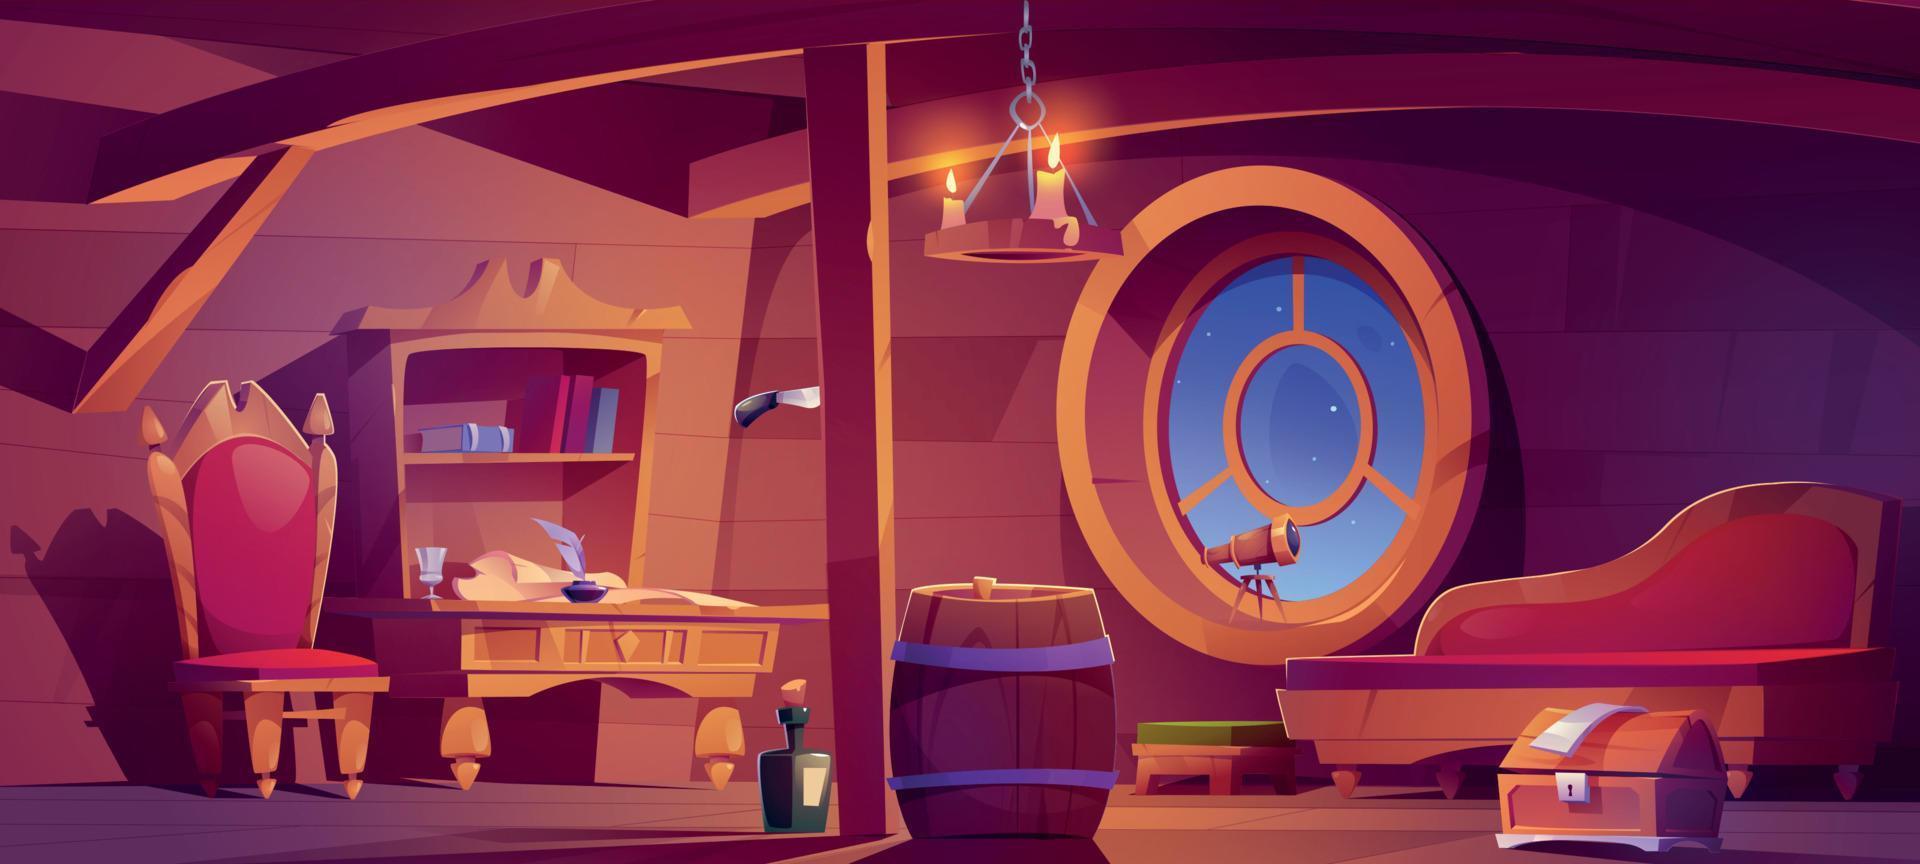 Pirate captain ship cabin, wooden room interior vector